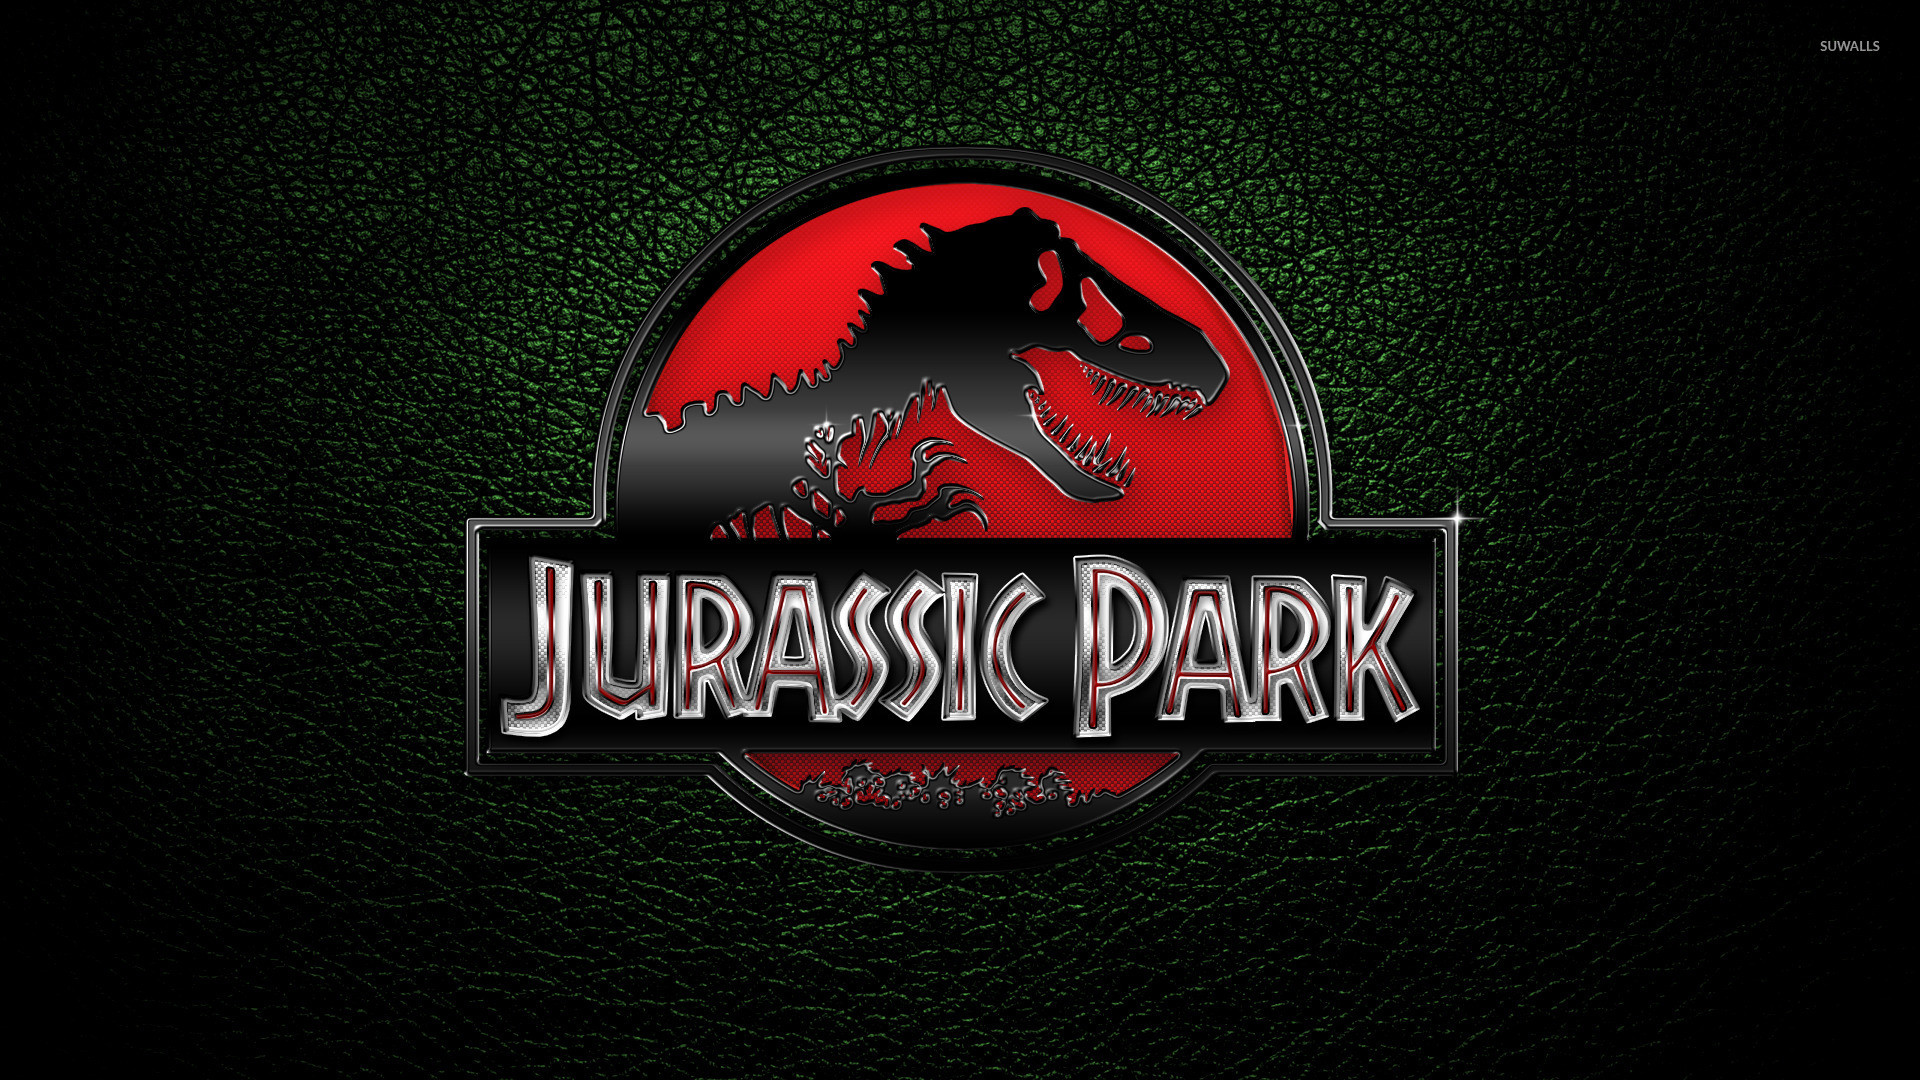 1920x1080 Jurassic World 2015 Movie Poster High Resolution Backgrounds -  http://wallucky.com/jurassic-world-2015-movie-poster-high-resolution-backgrounds/  | Pinterest ...